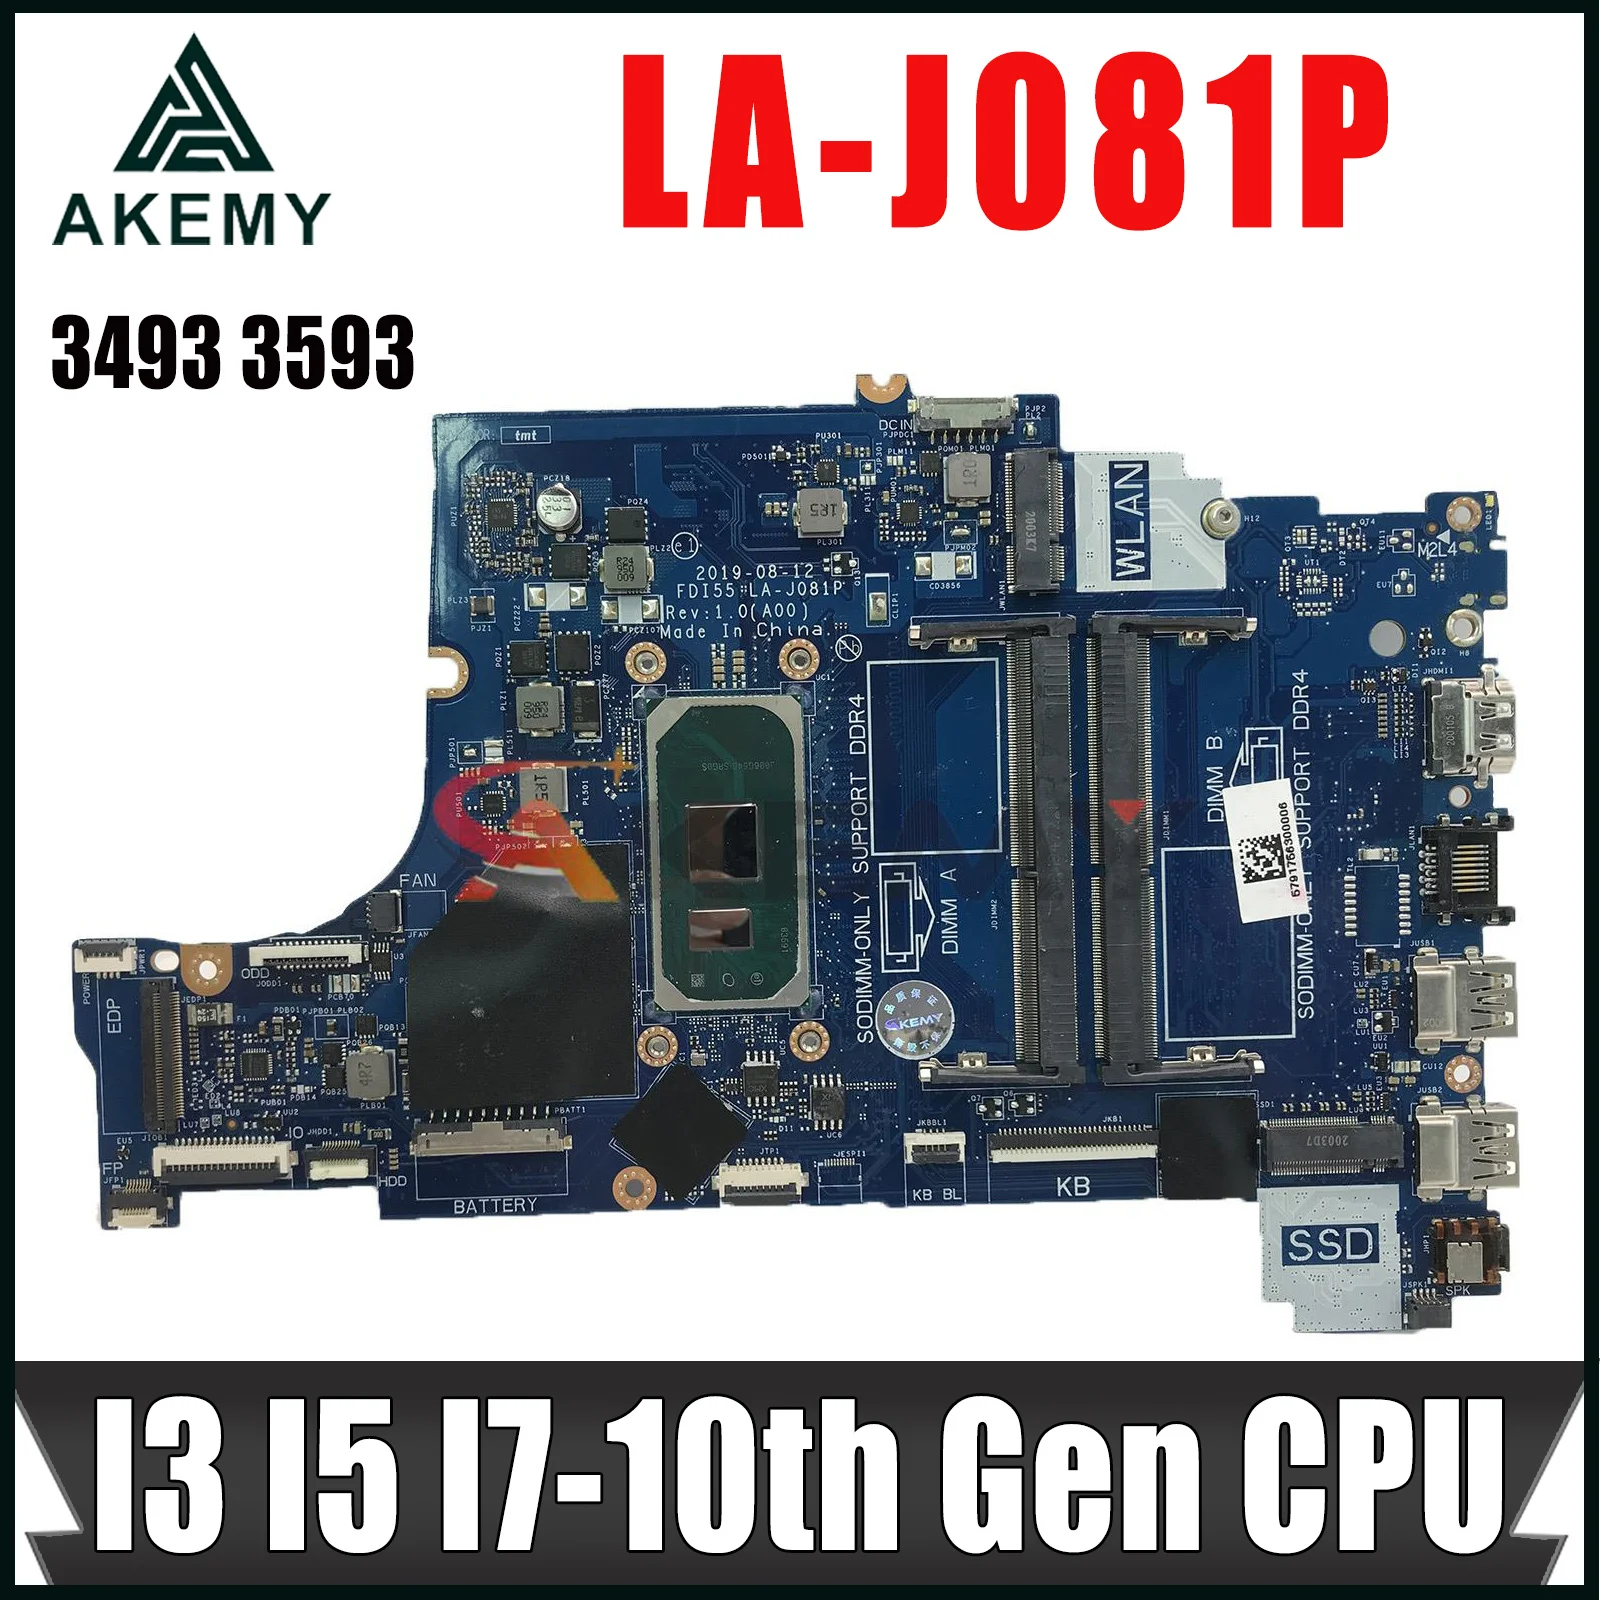 

For DELL Inspiron 3493 3593 Laptop pc motherboard LA-J081P CN-047MF0 004C38 3DD3K mainboard w/ i3-1005G1 I5-1035G1 I7-1065G7 CPU